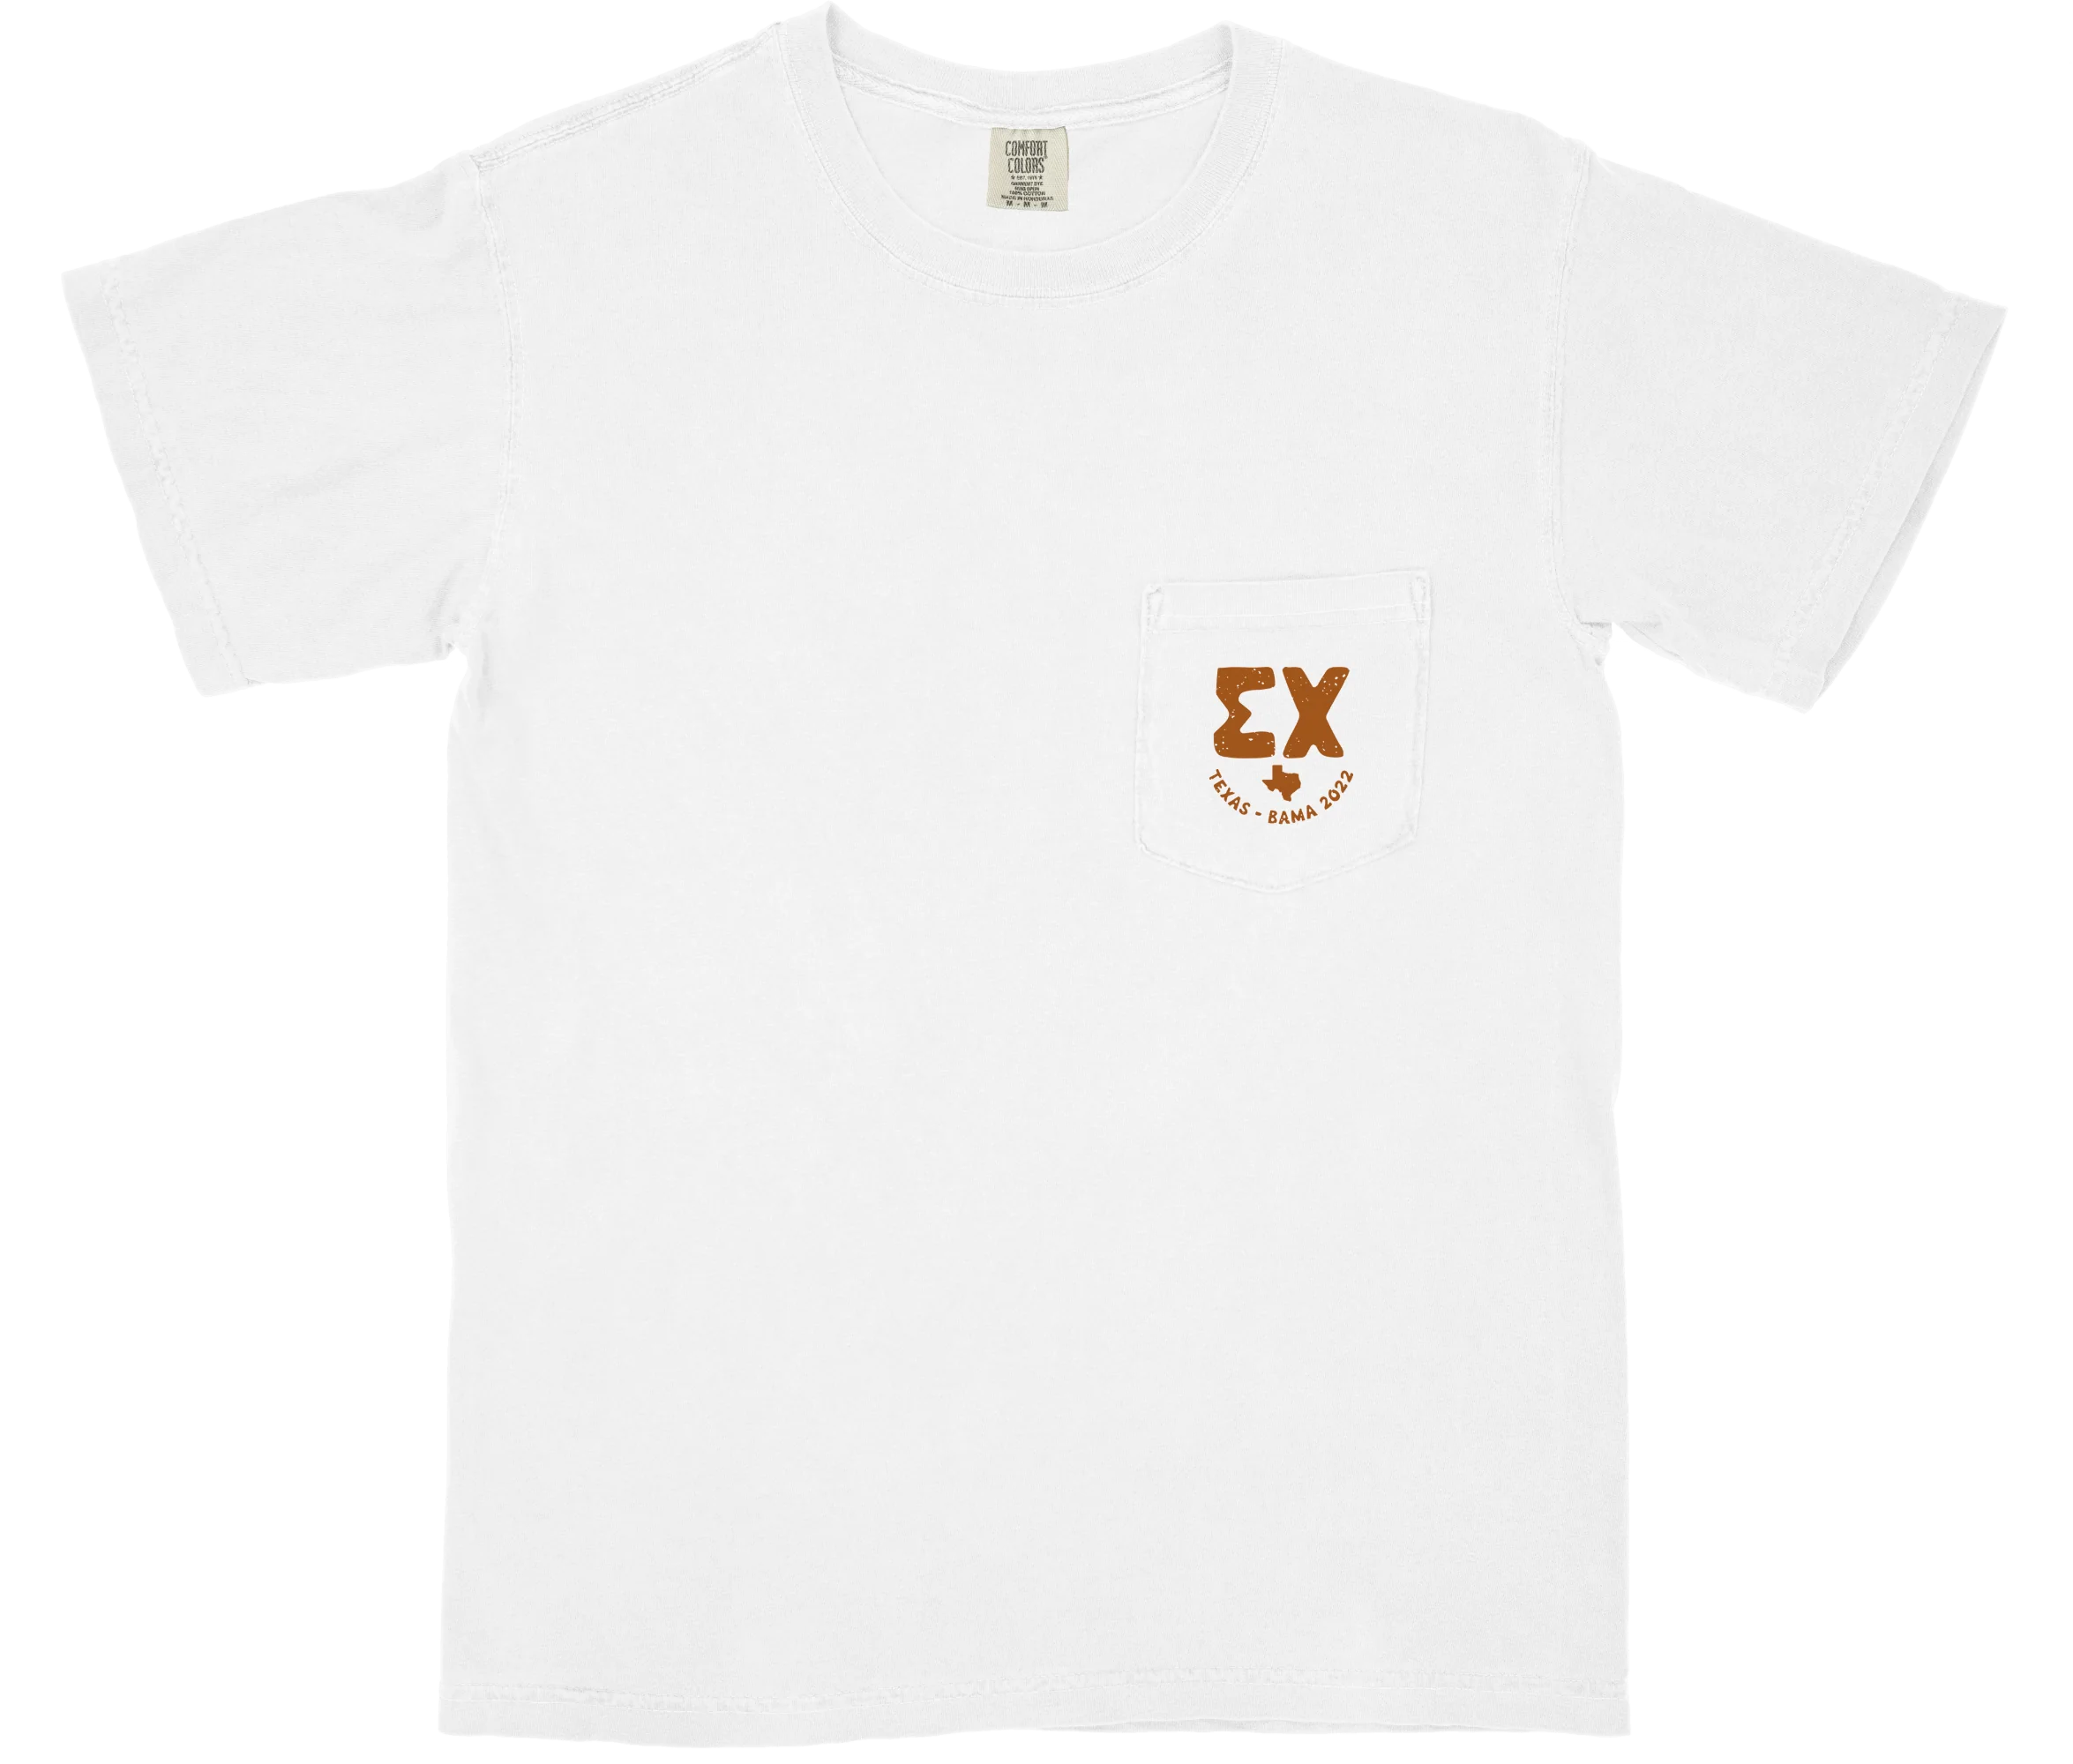 Texas-Bama Shirt